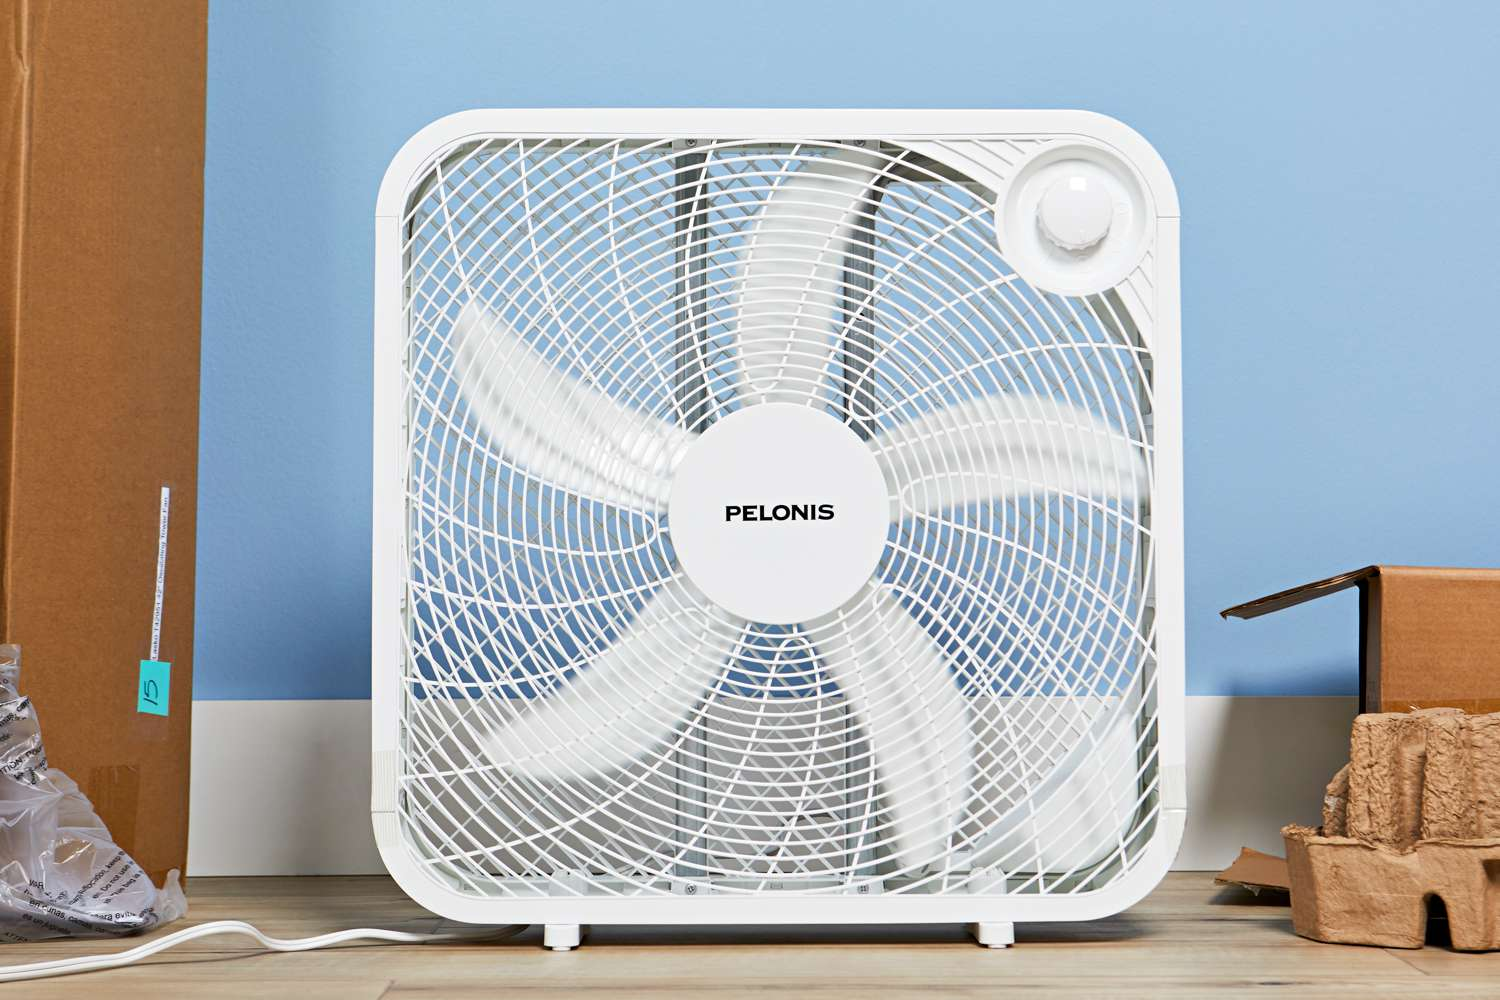 Factors Affecting Power Consumption of a box fan